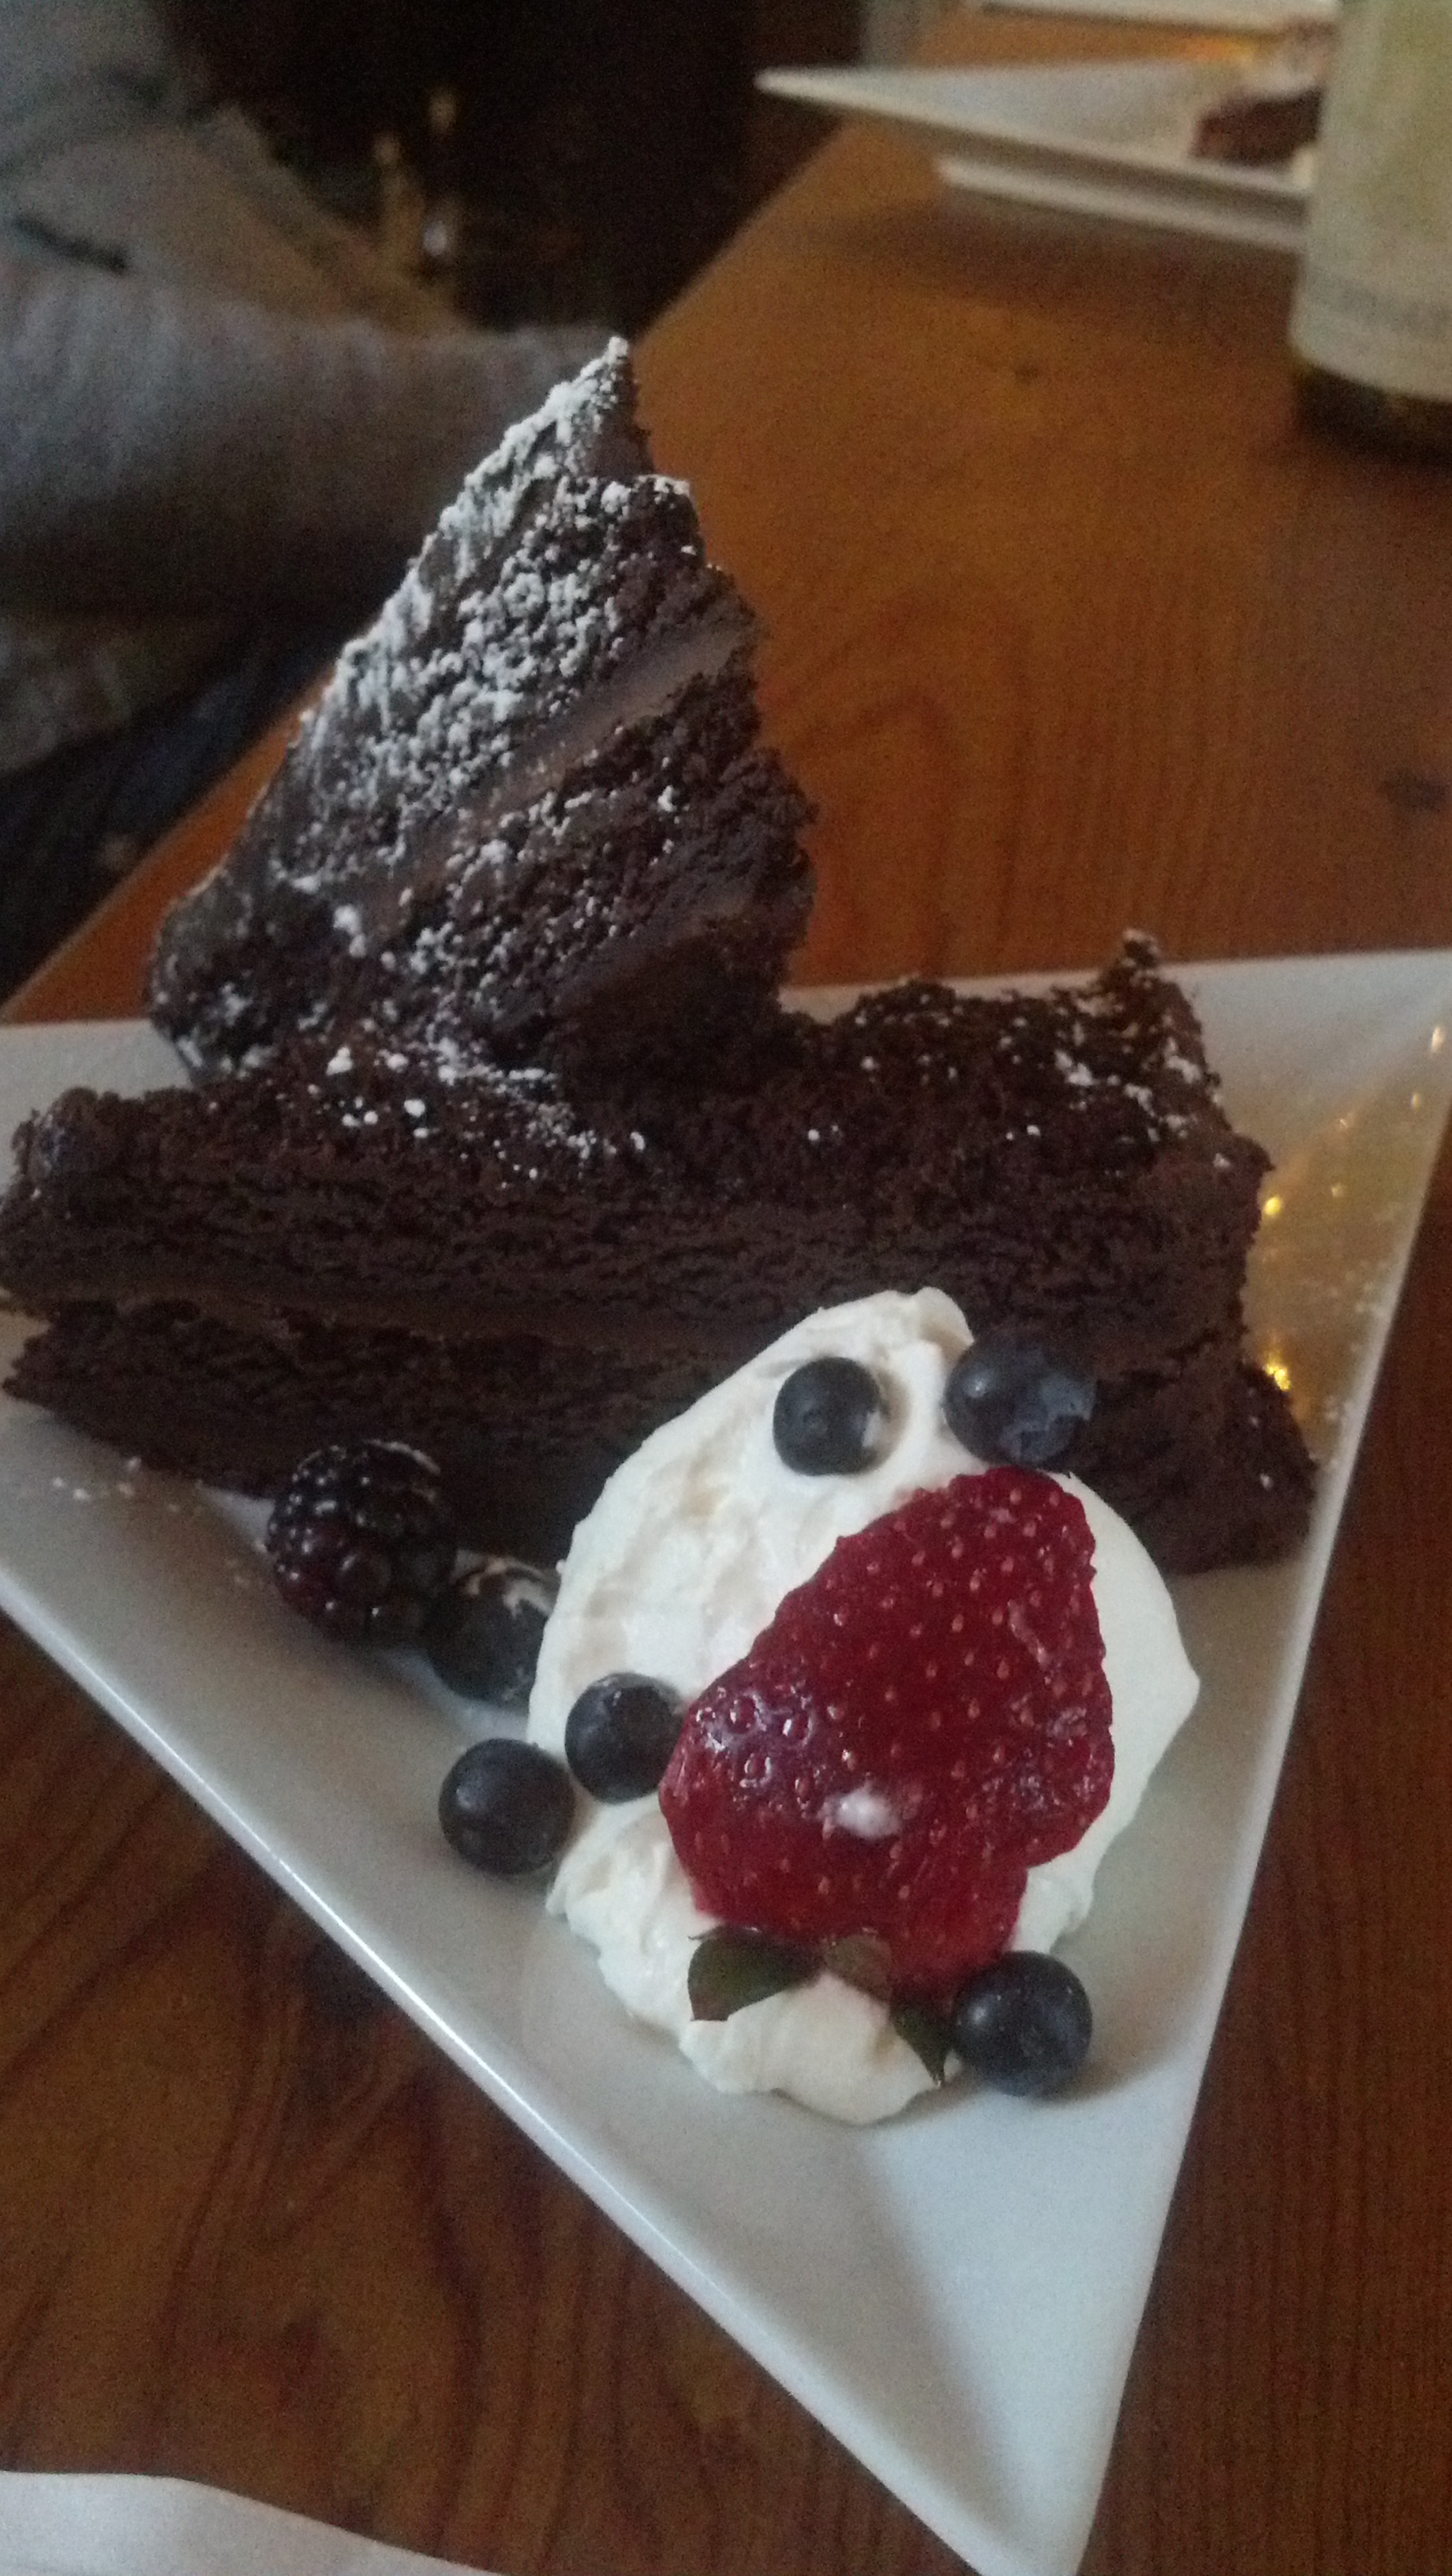 Chocolate cake!